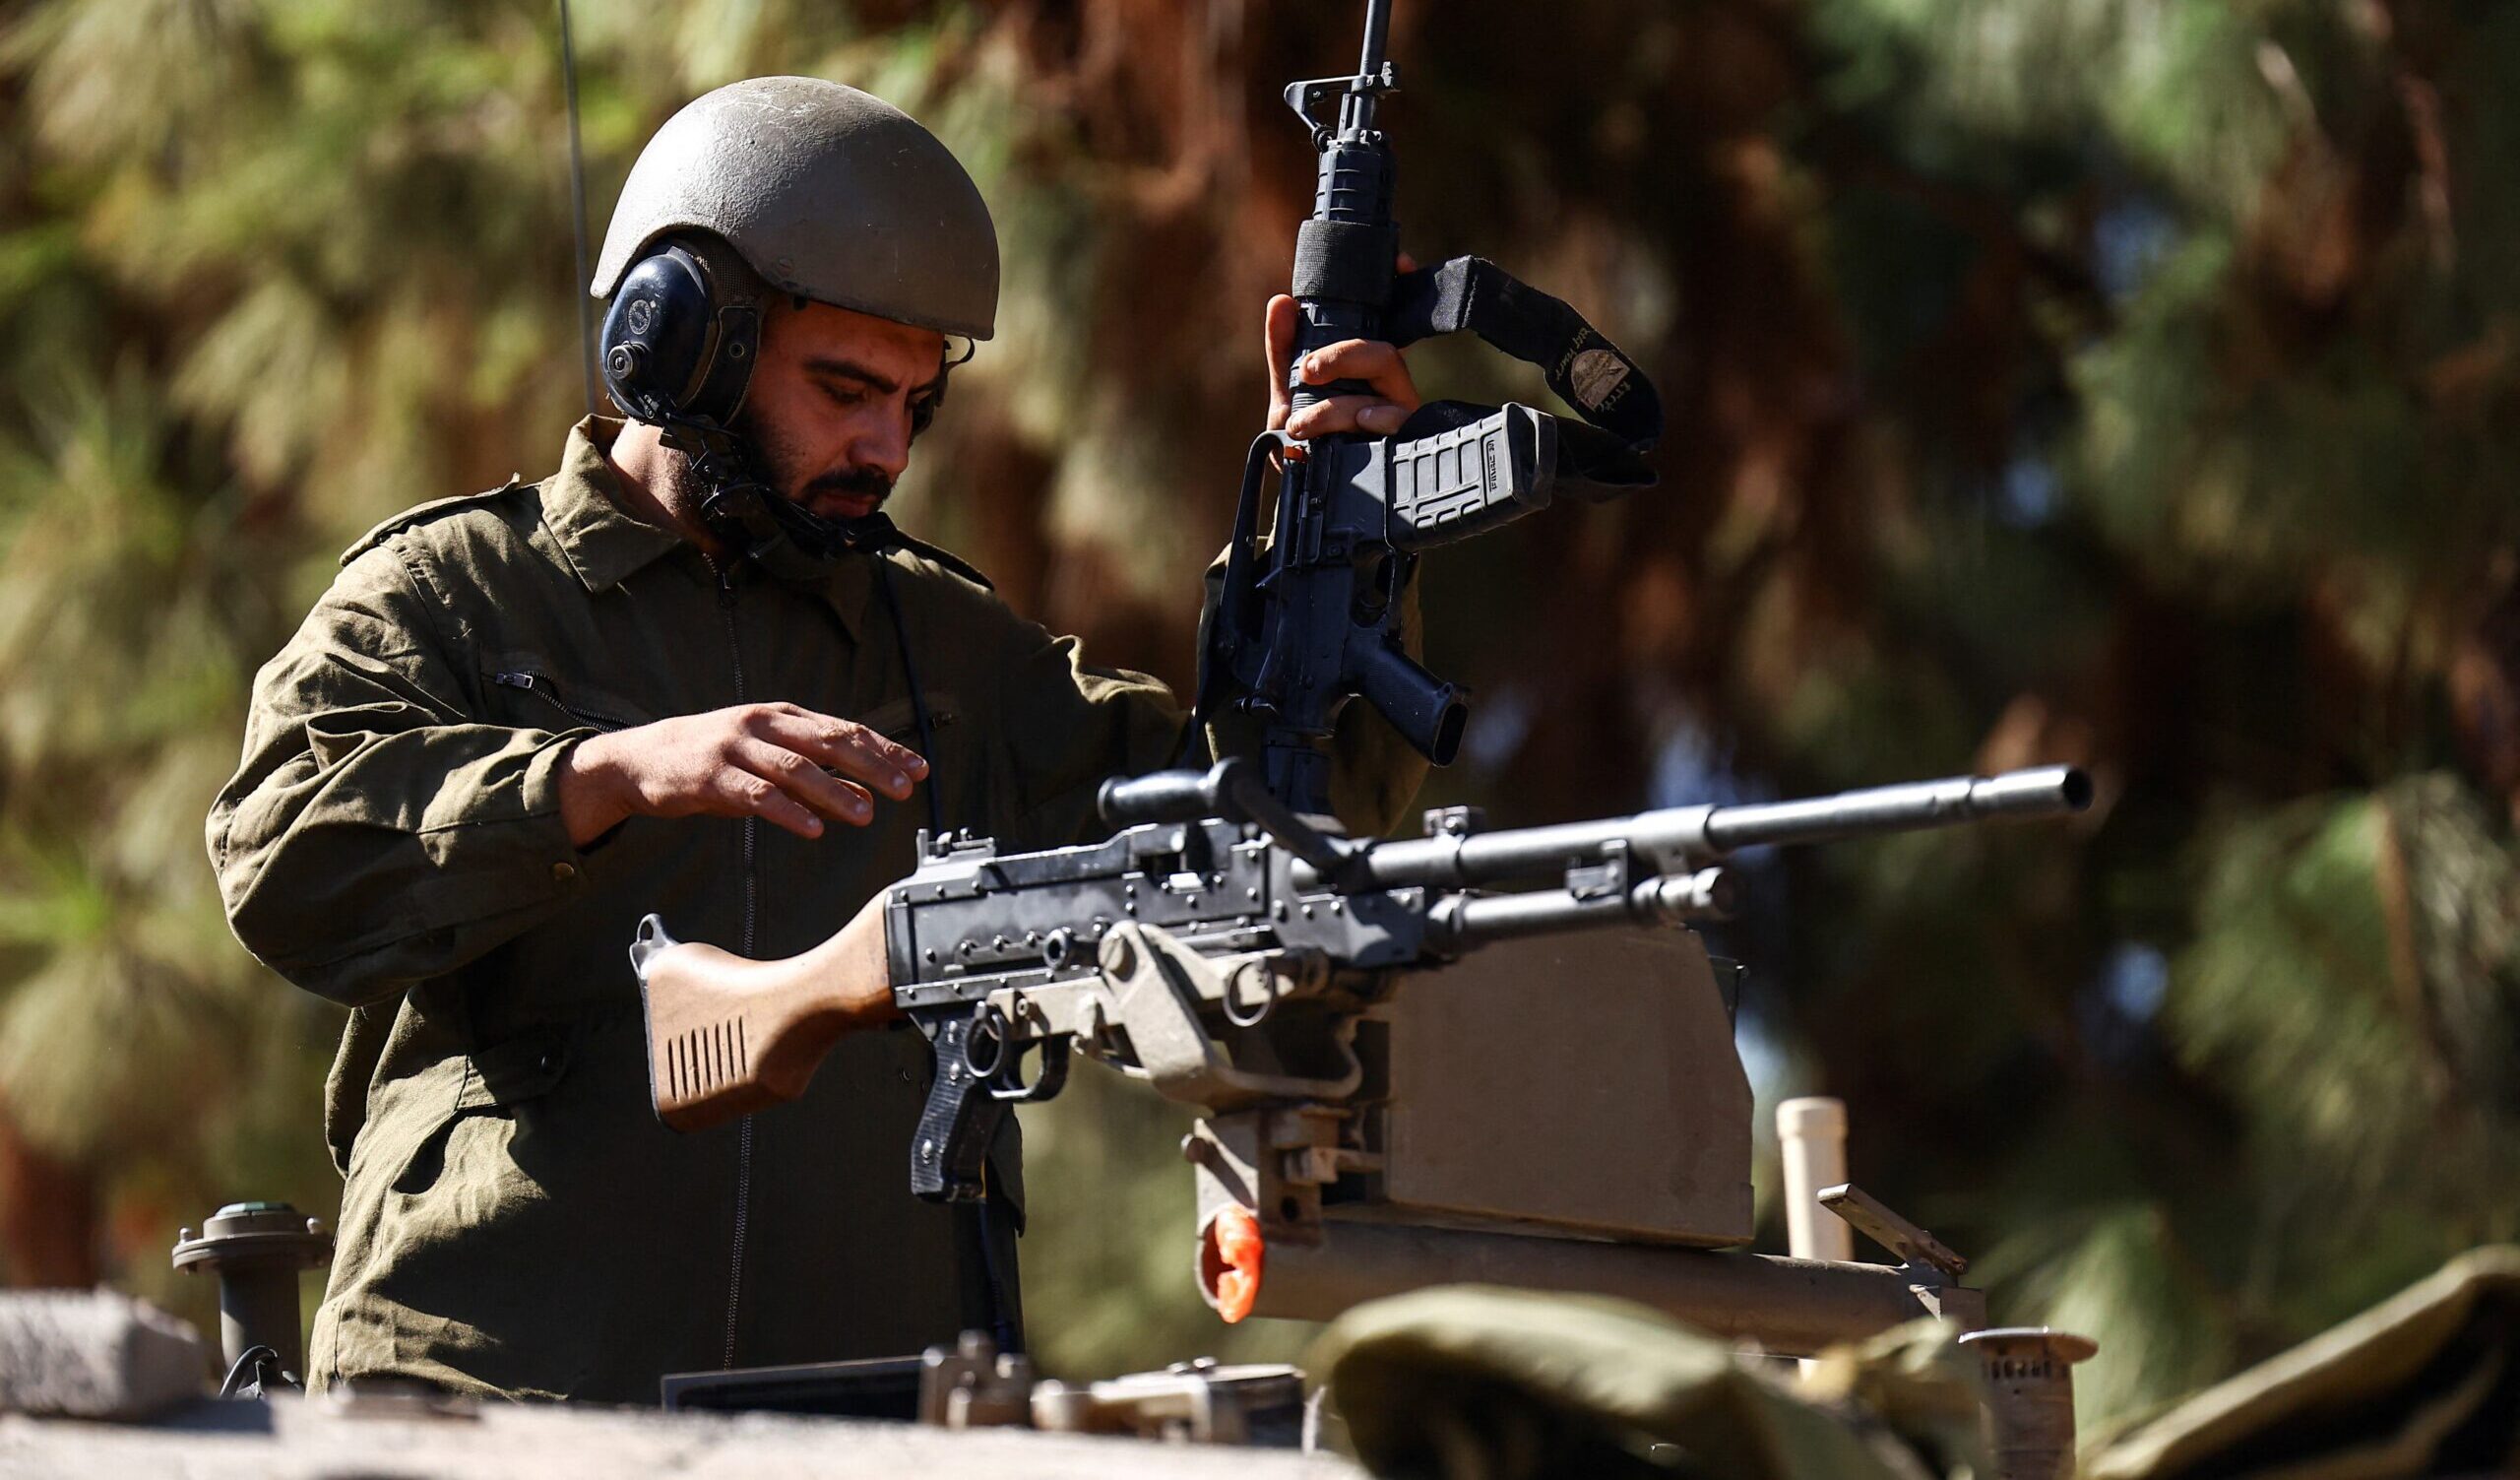 Guerra di Gaza, l'assenza di una strategia politica mascherata dalla forza militare